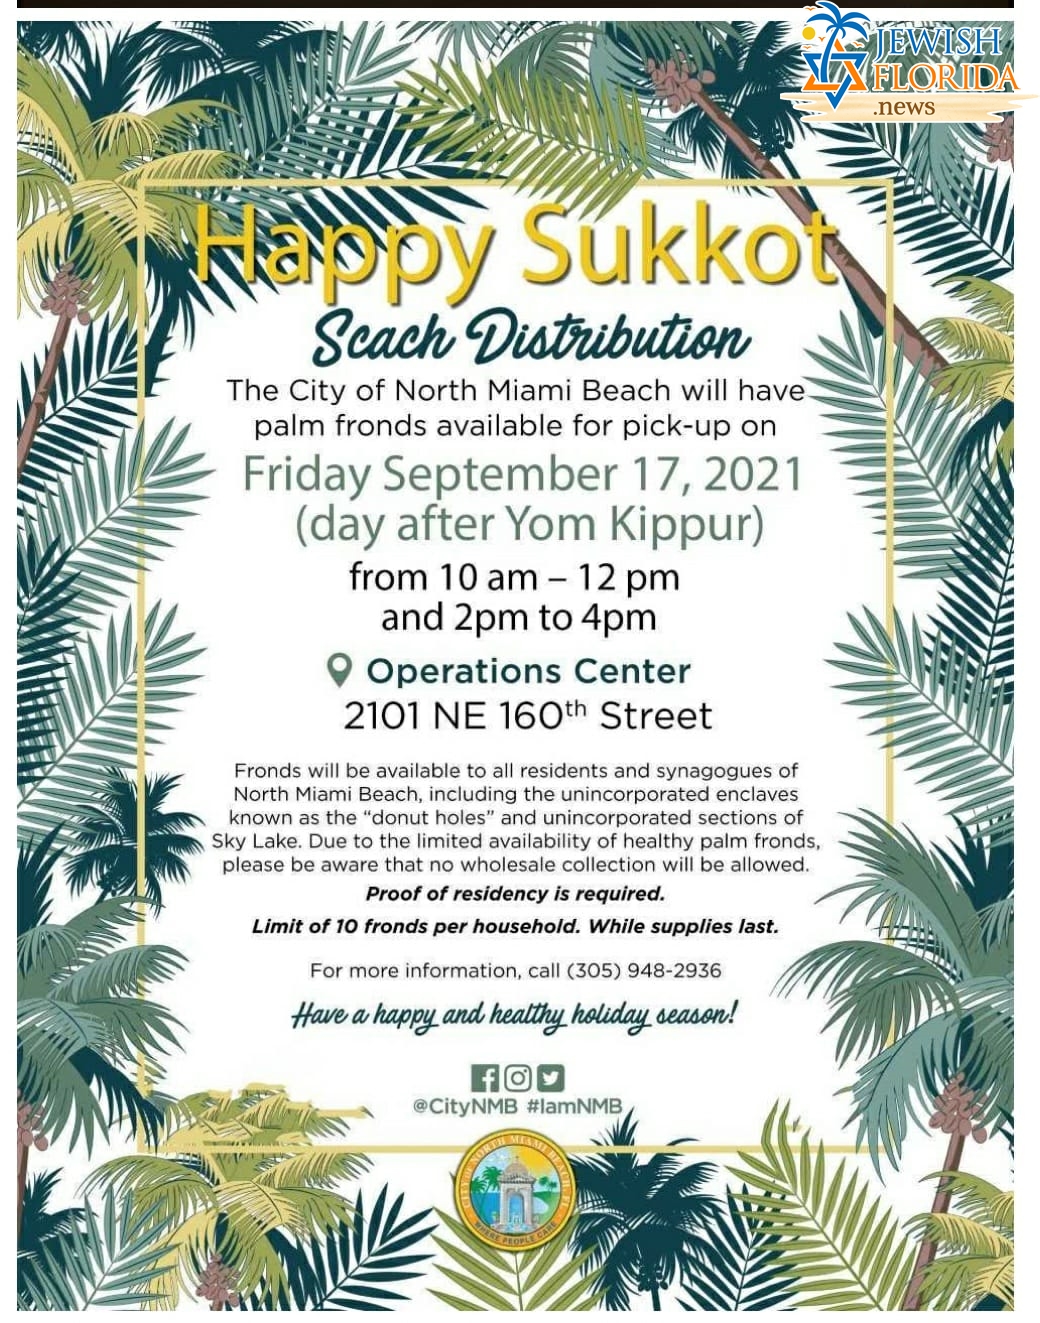 Happy Sukkot – Scach Distribution